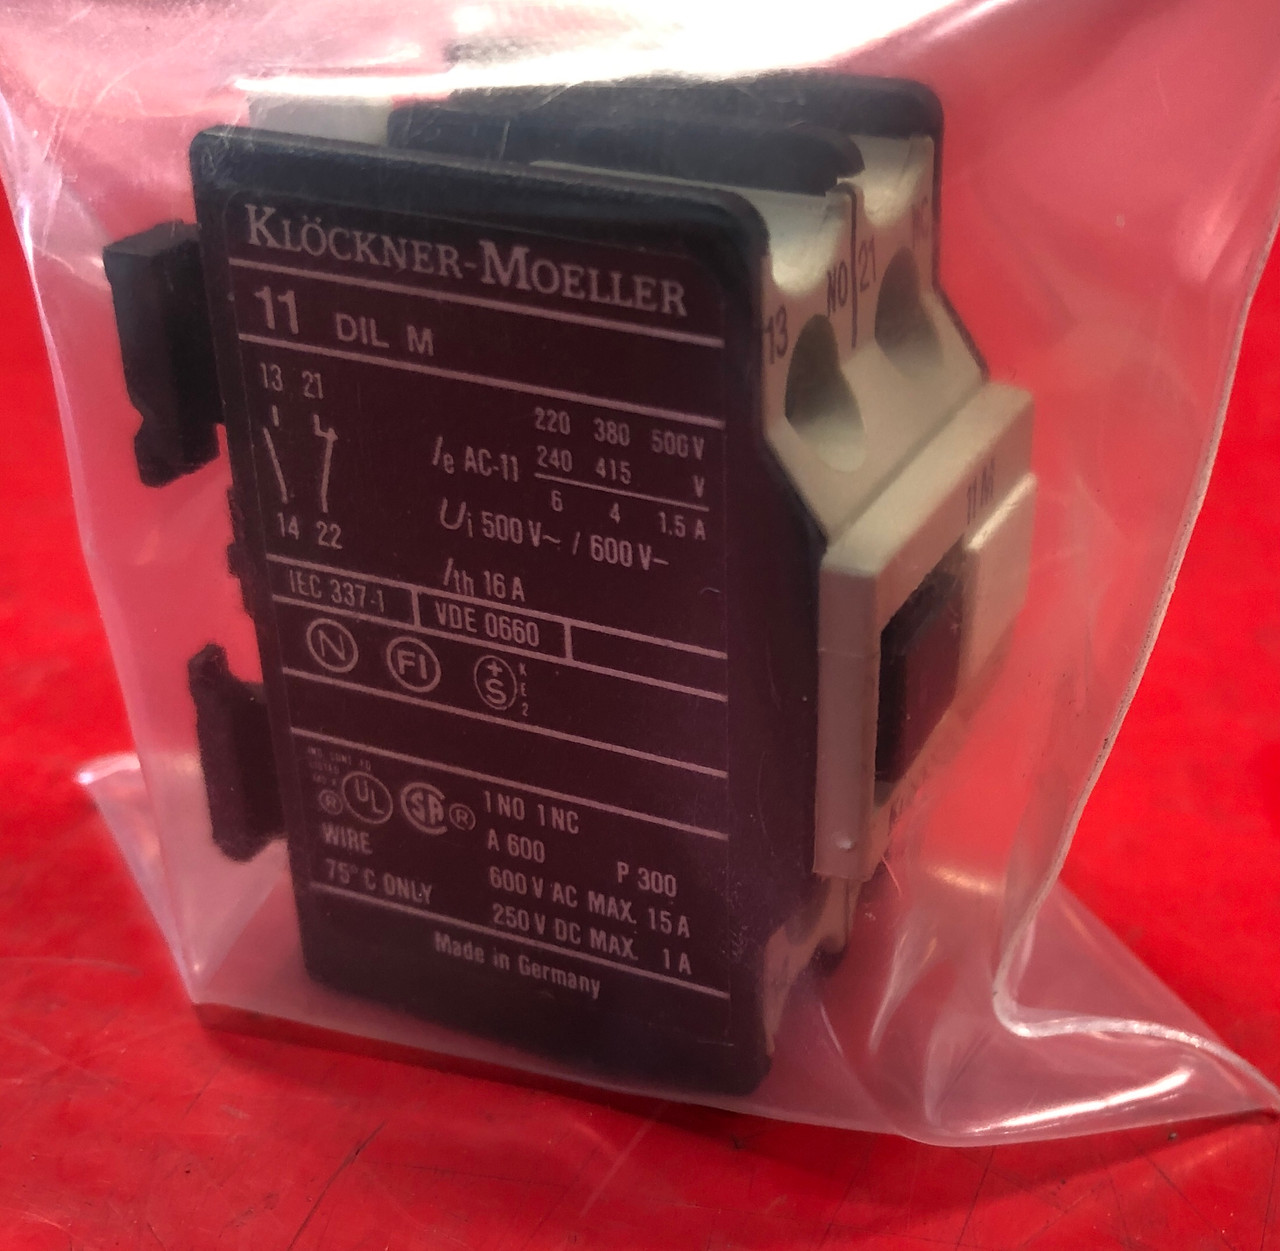 Klockner-Moeller 11 DIL M Auxiliary Contact Block